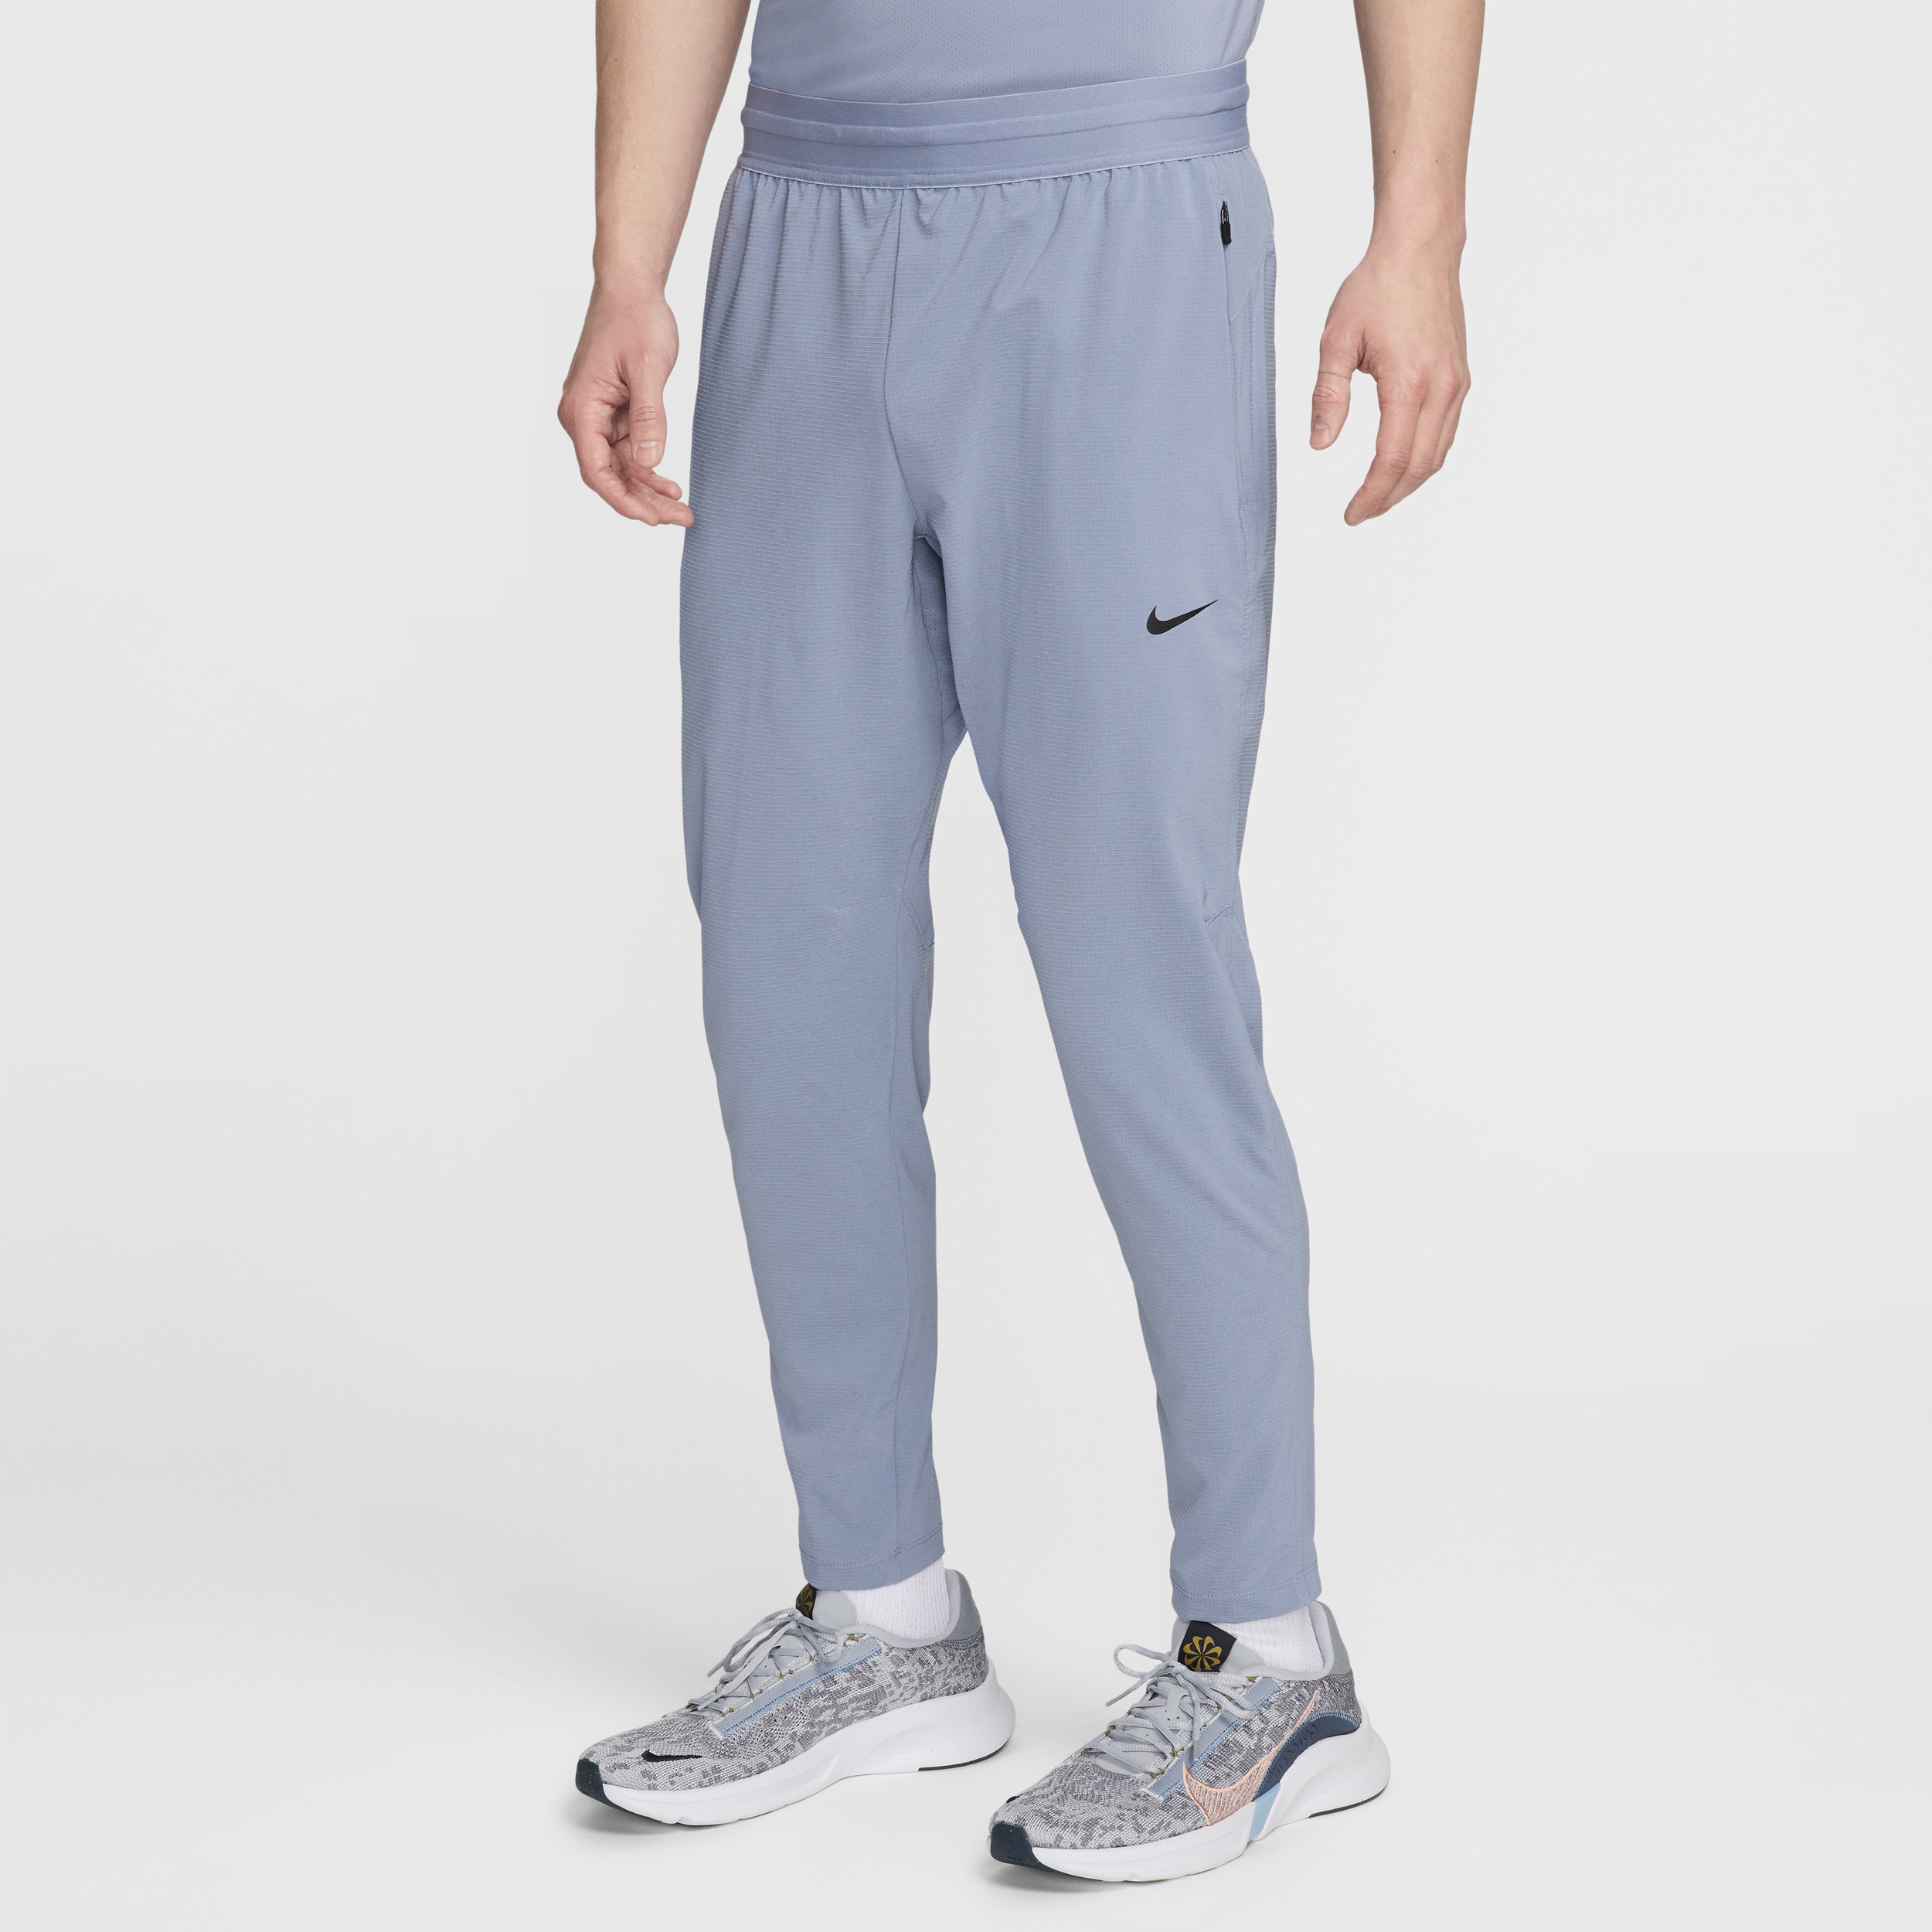 Pantaloni da fitness Dri-FIT Nike Flex Rep – Uomo - Blu